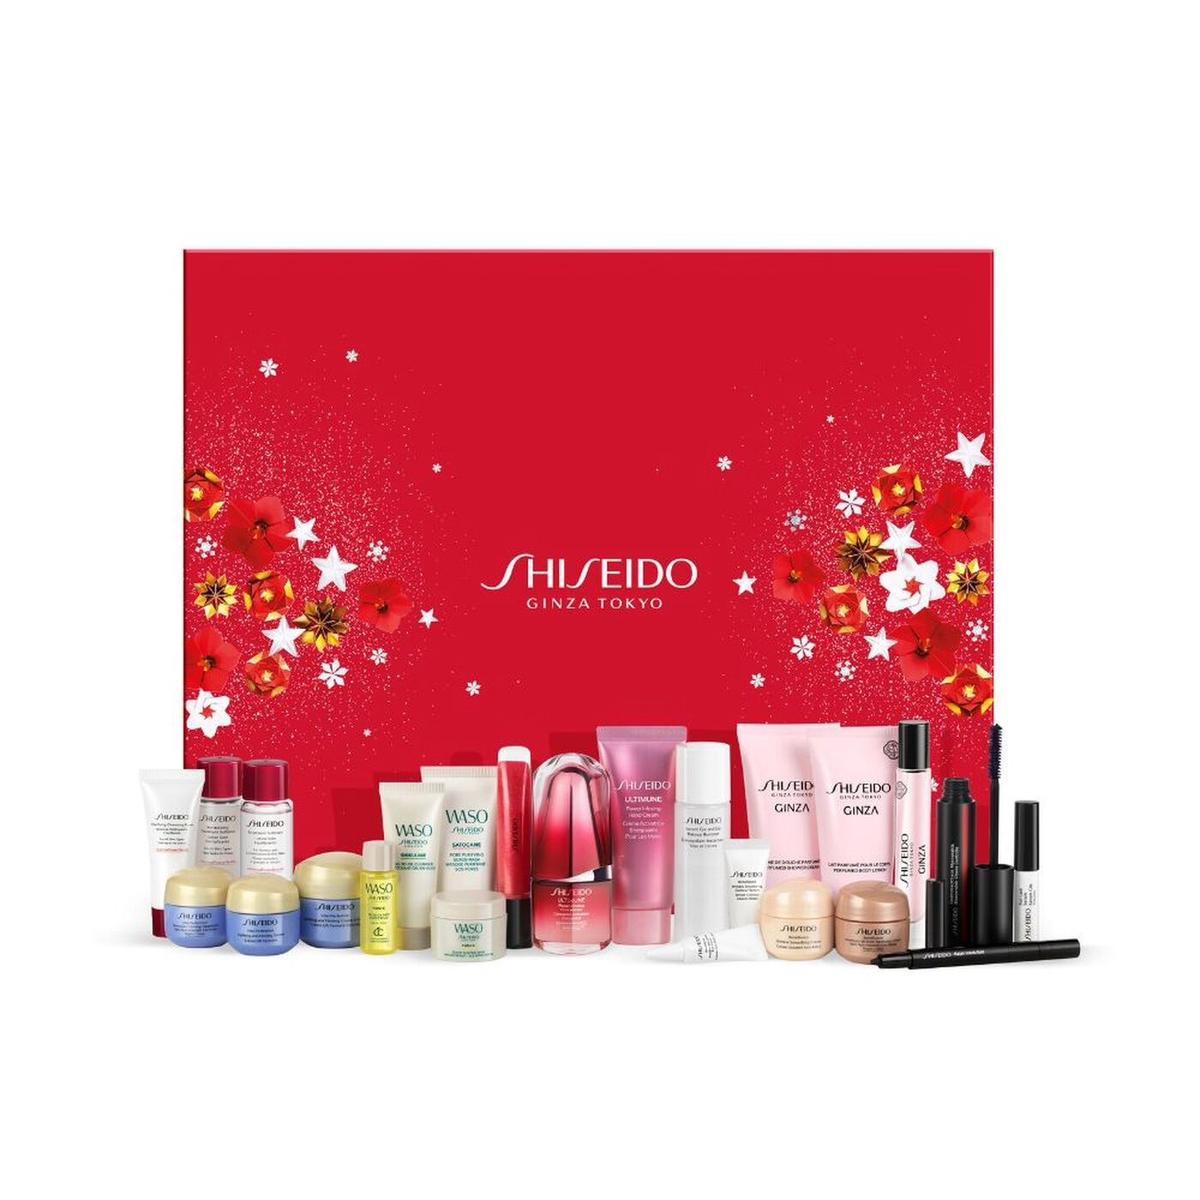 Calendario de adviento de Shiseido